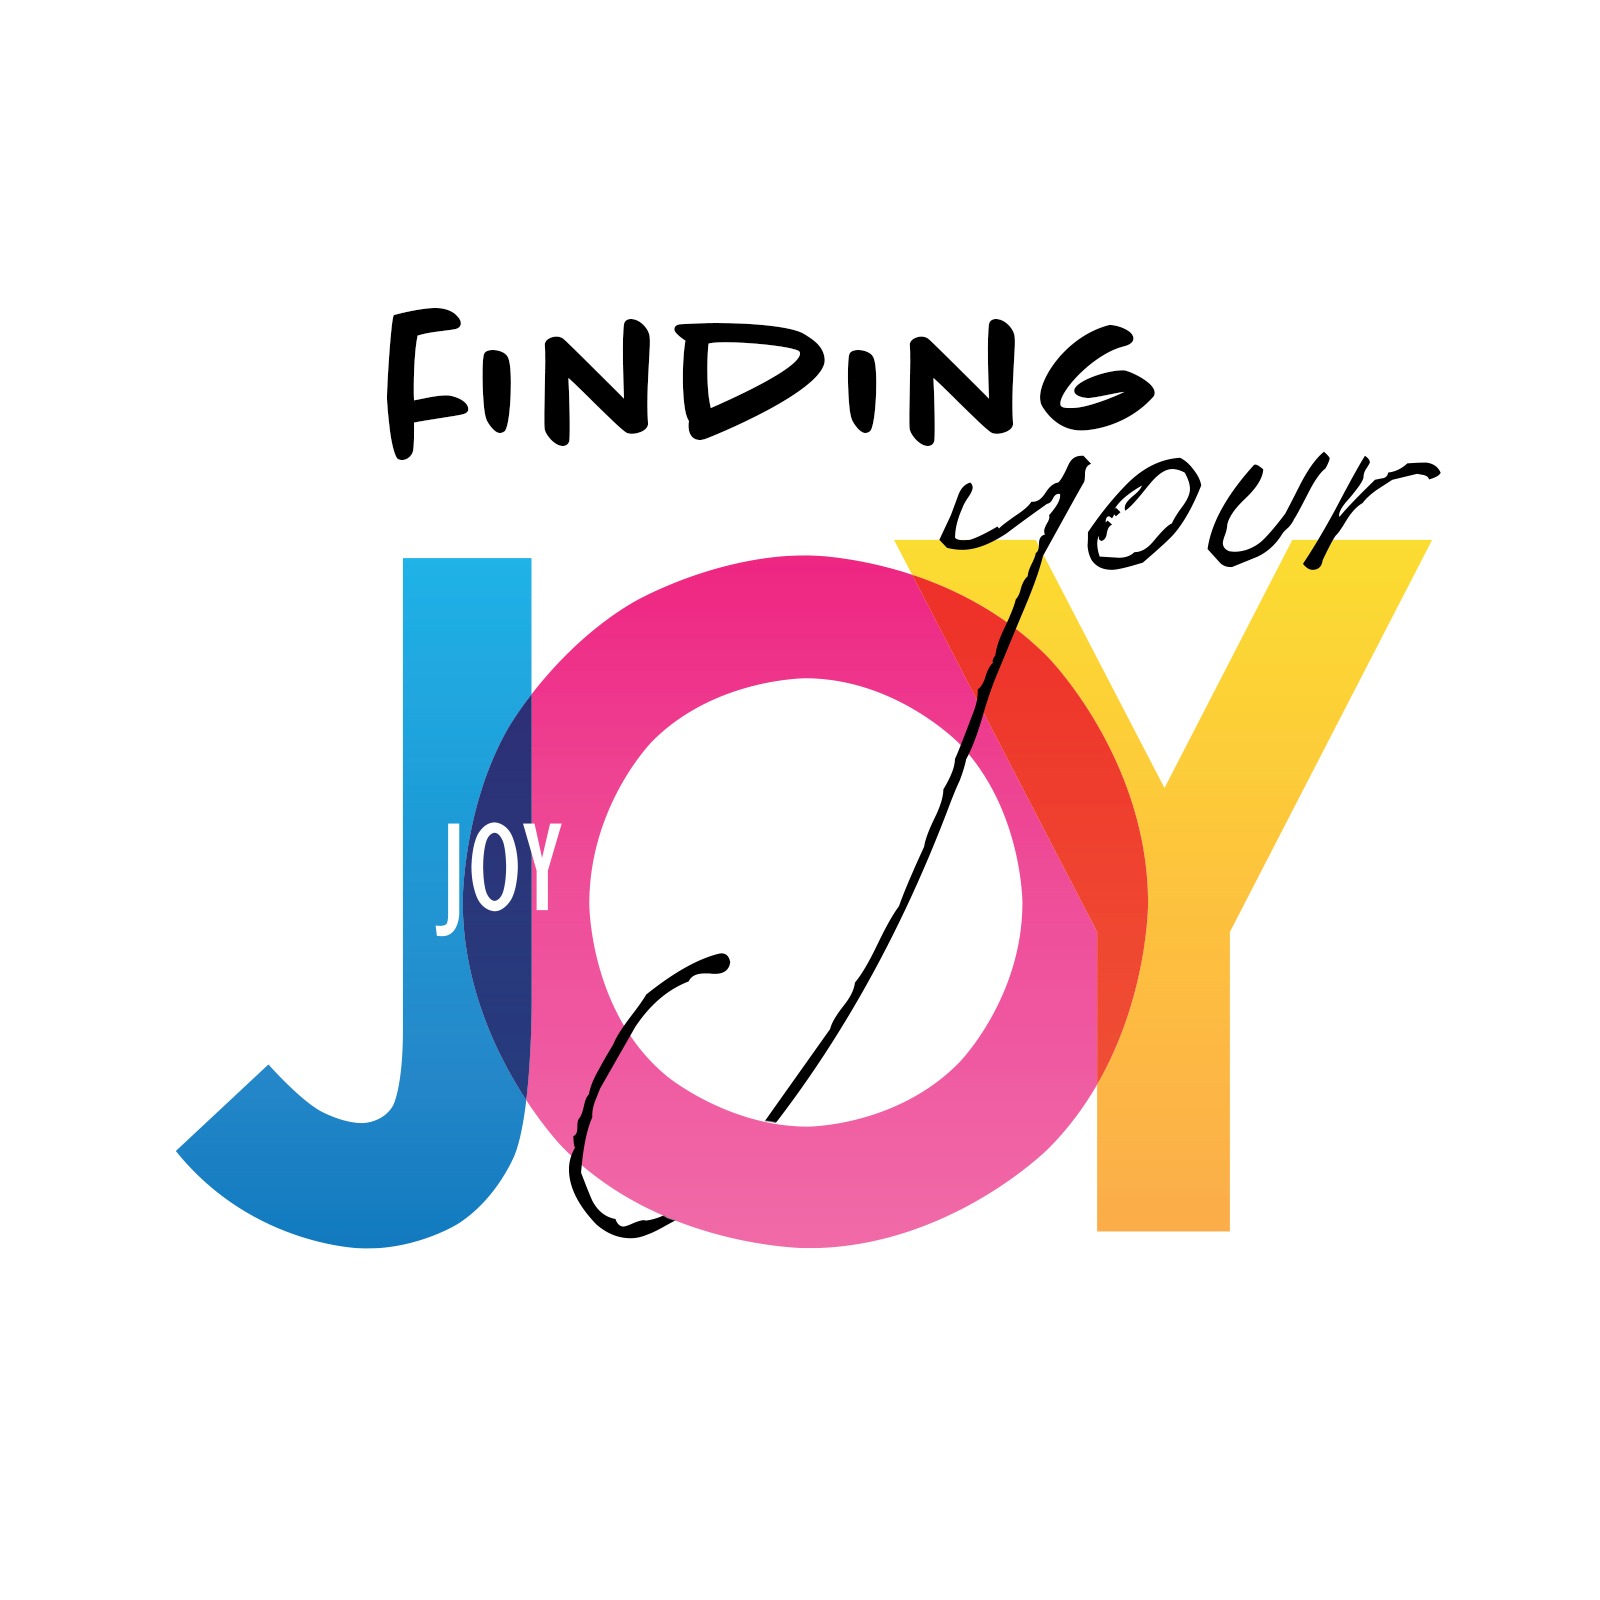 KBOE Radio Series - Finding Your Joy with Mike Sereg